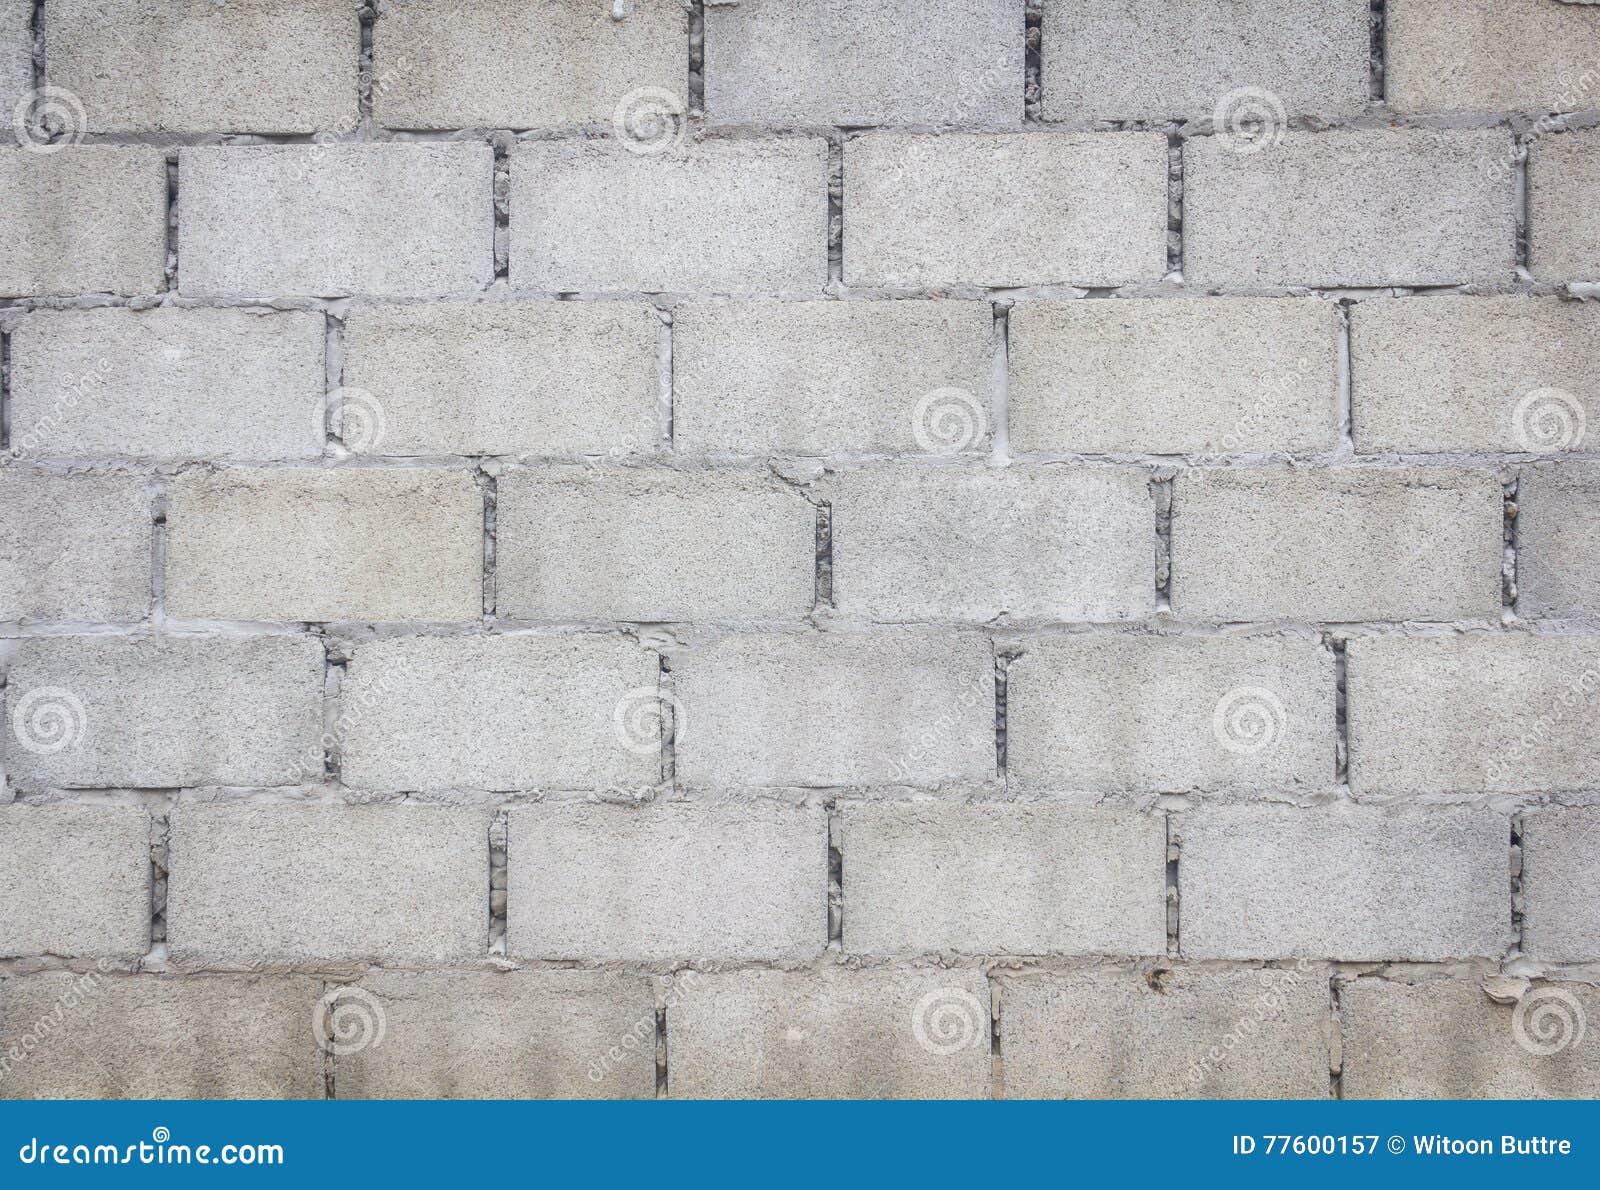 Cinder Block Wall Background, Stock Image - Image of brick, outdoors